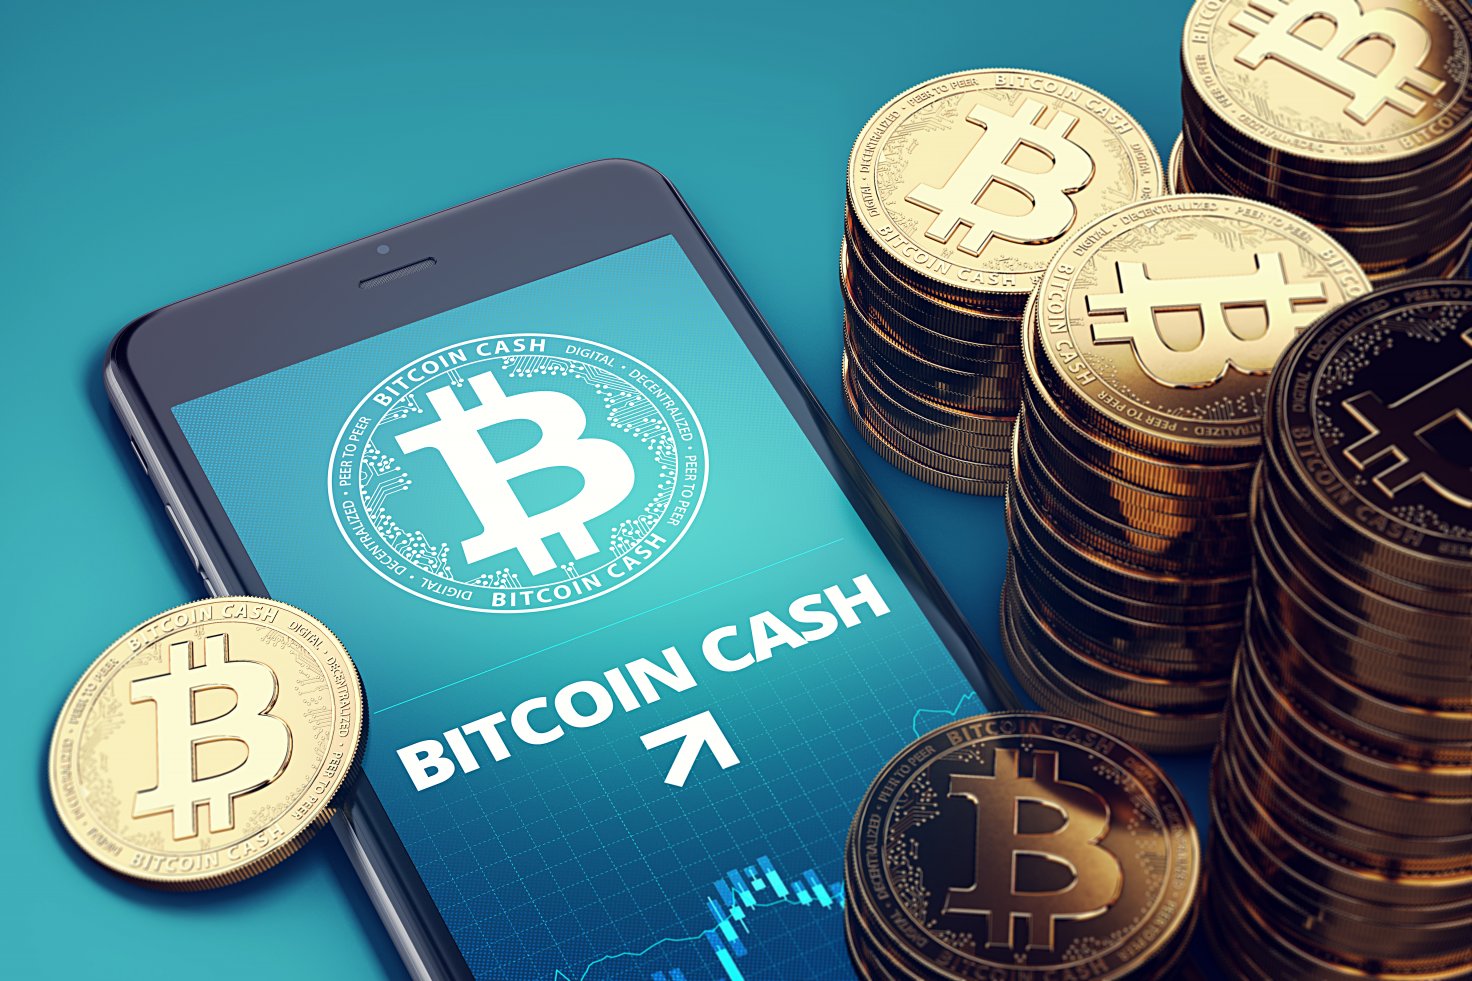 Wallet investor bitcoin cash 2021 predictions short sell bitcoins